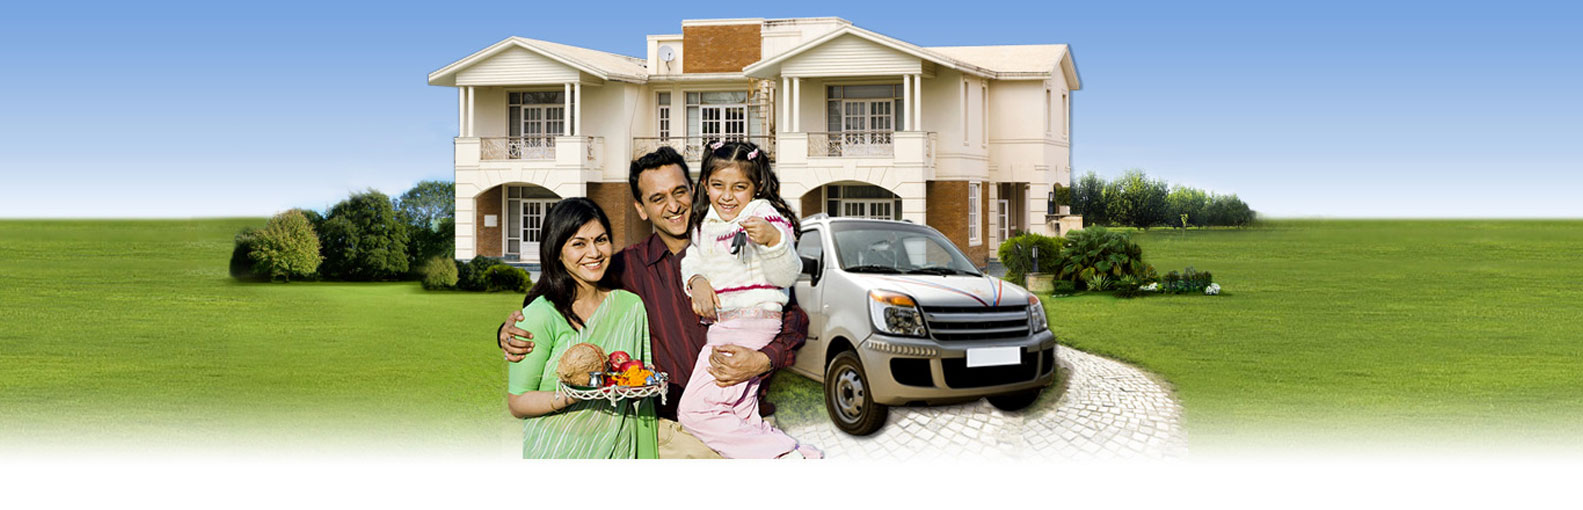 New and Used Car Loan in moradabad, Home Loan in moradabad, loans against property in moradabad, personal loans in moradabad.